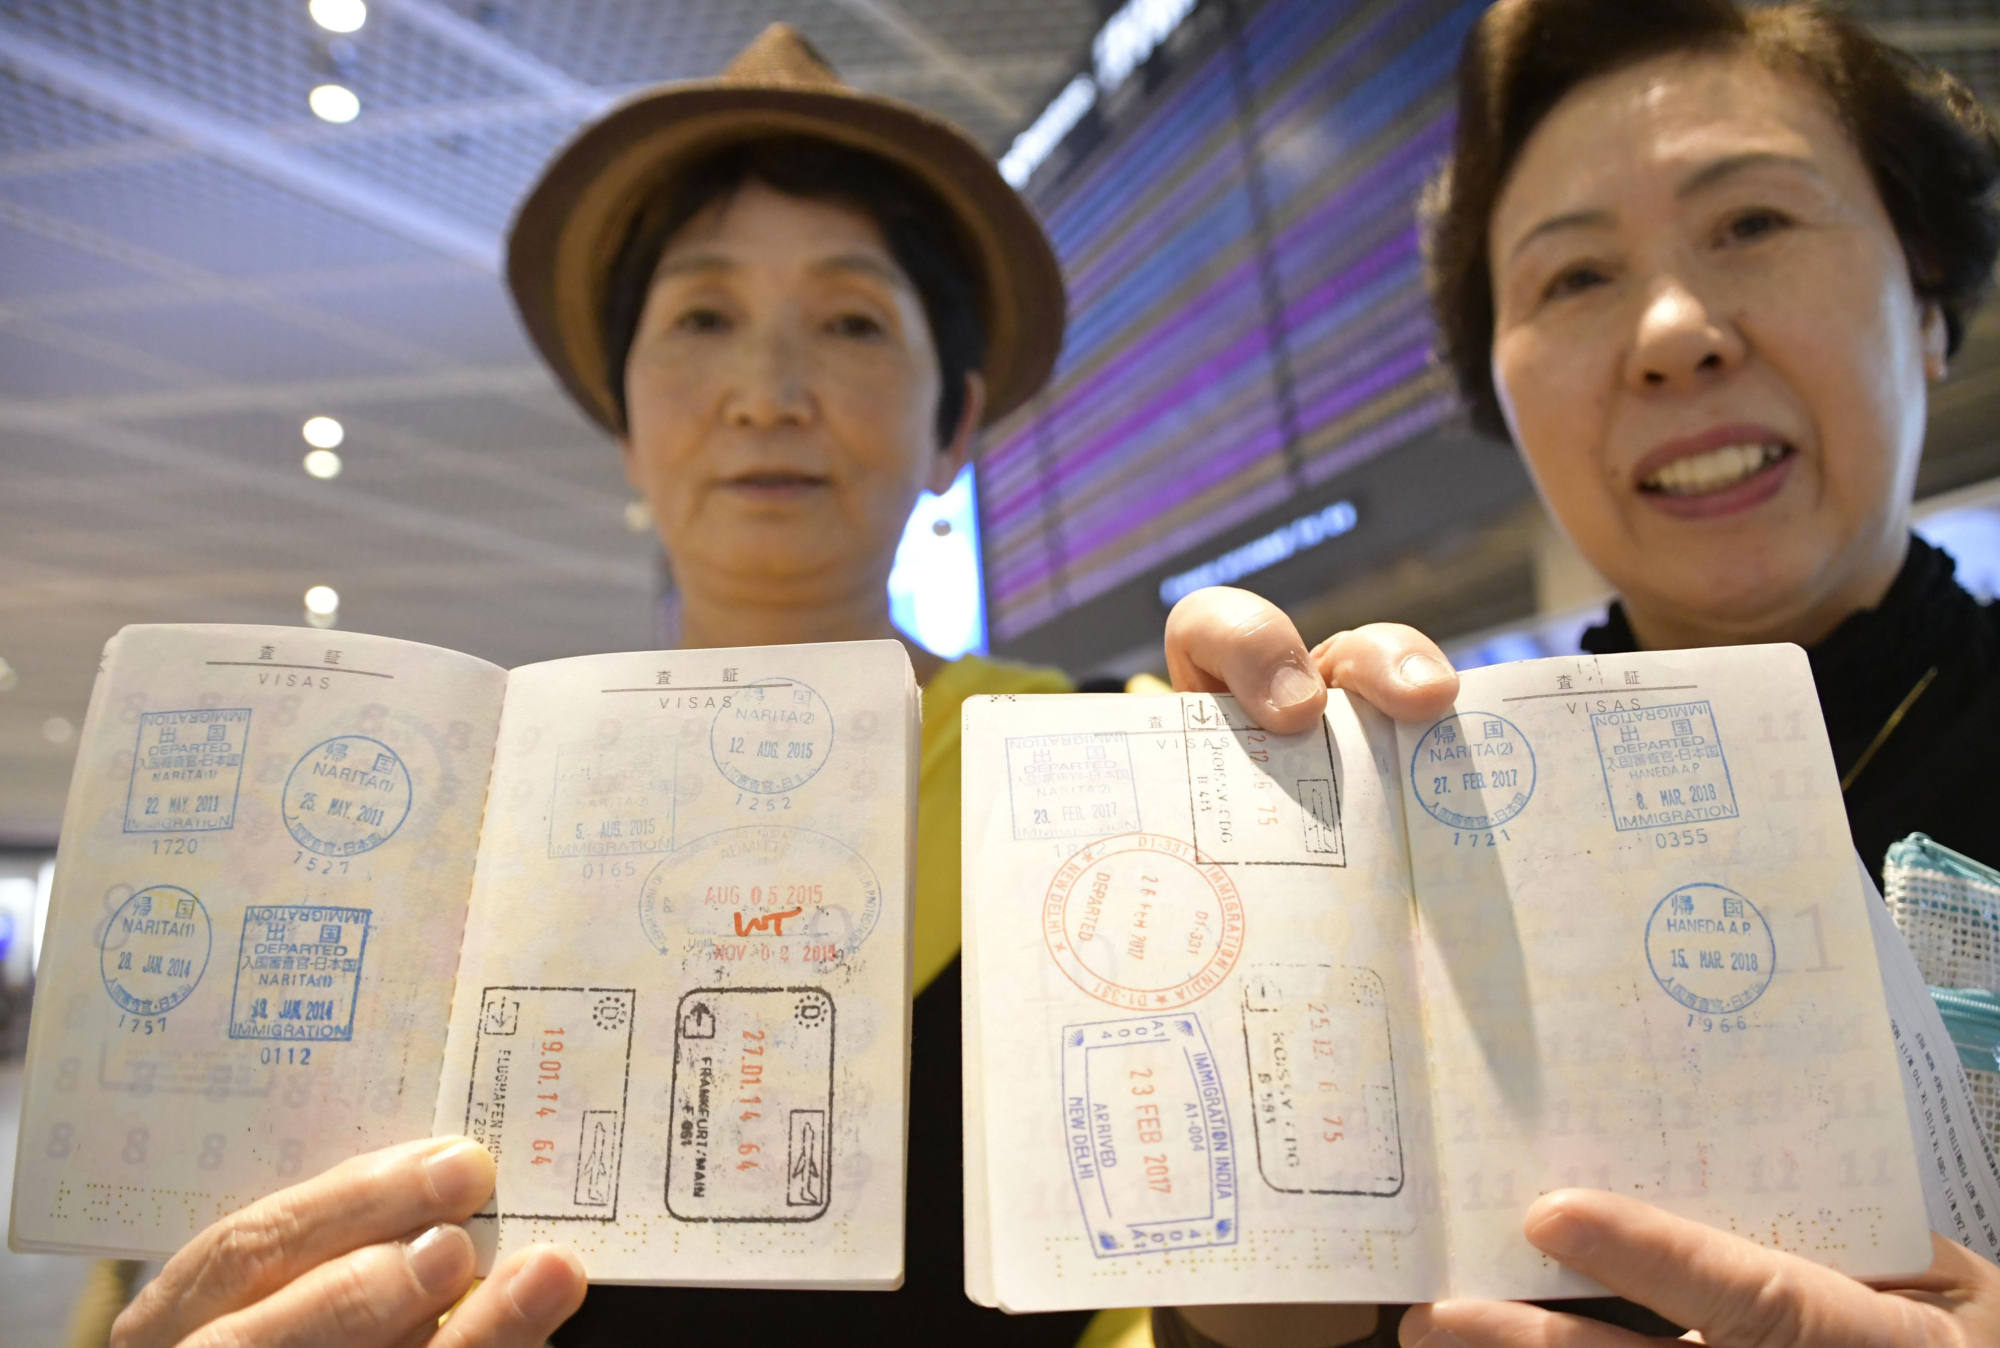 Timehonored passport stamp vanishing in name of digital convenience